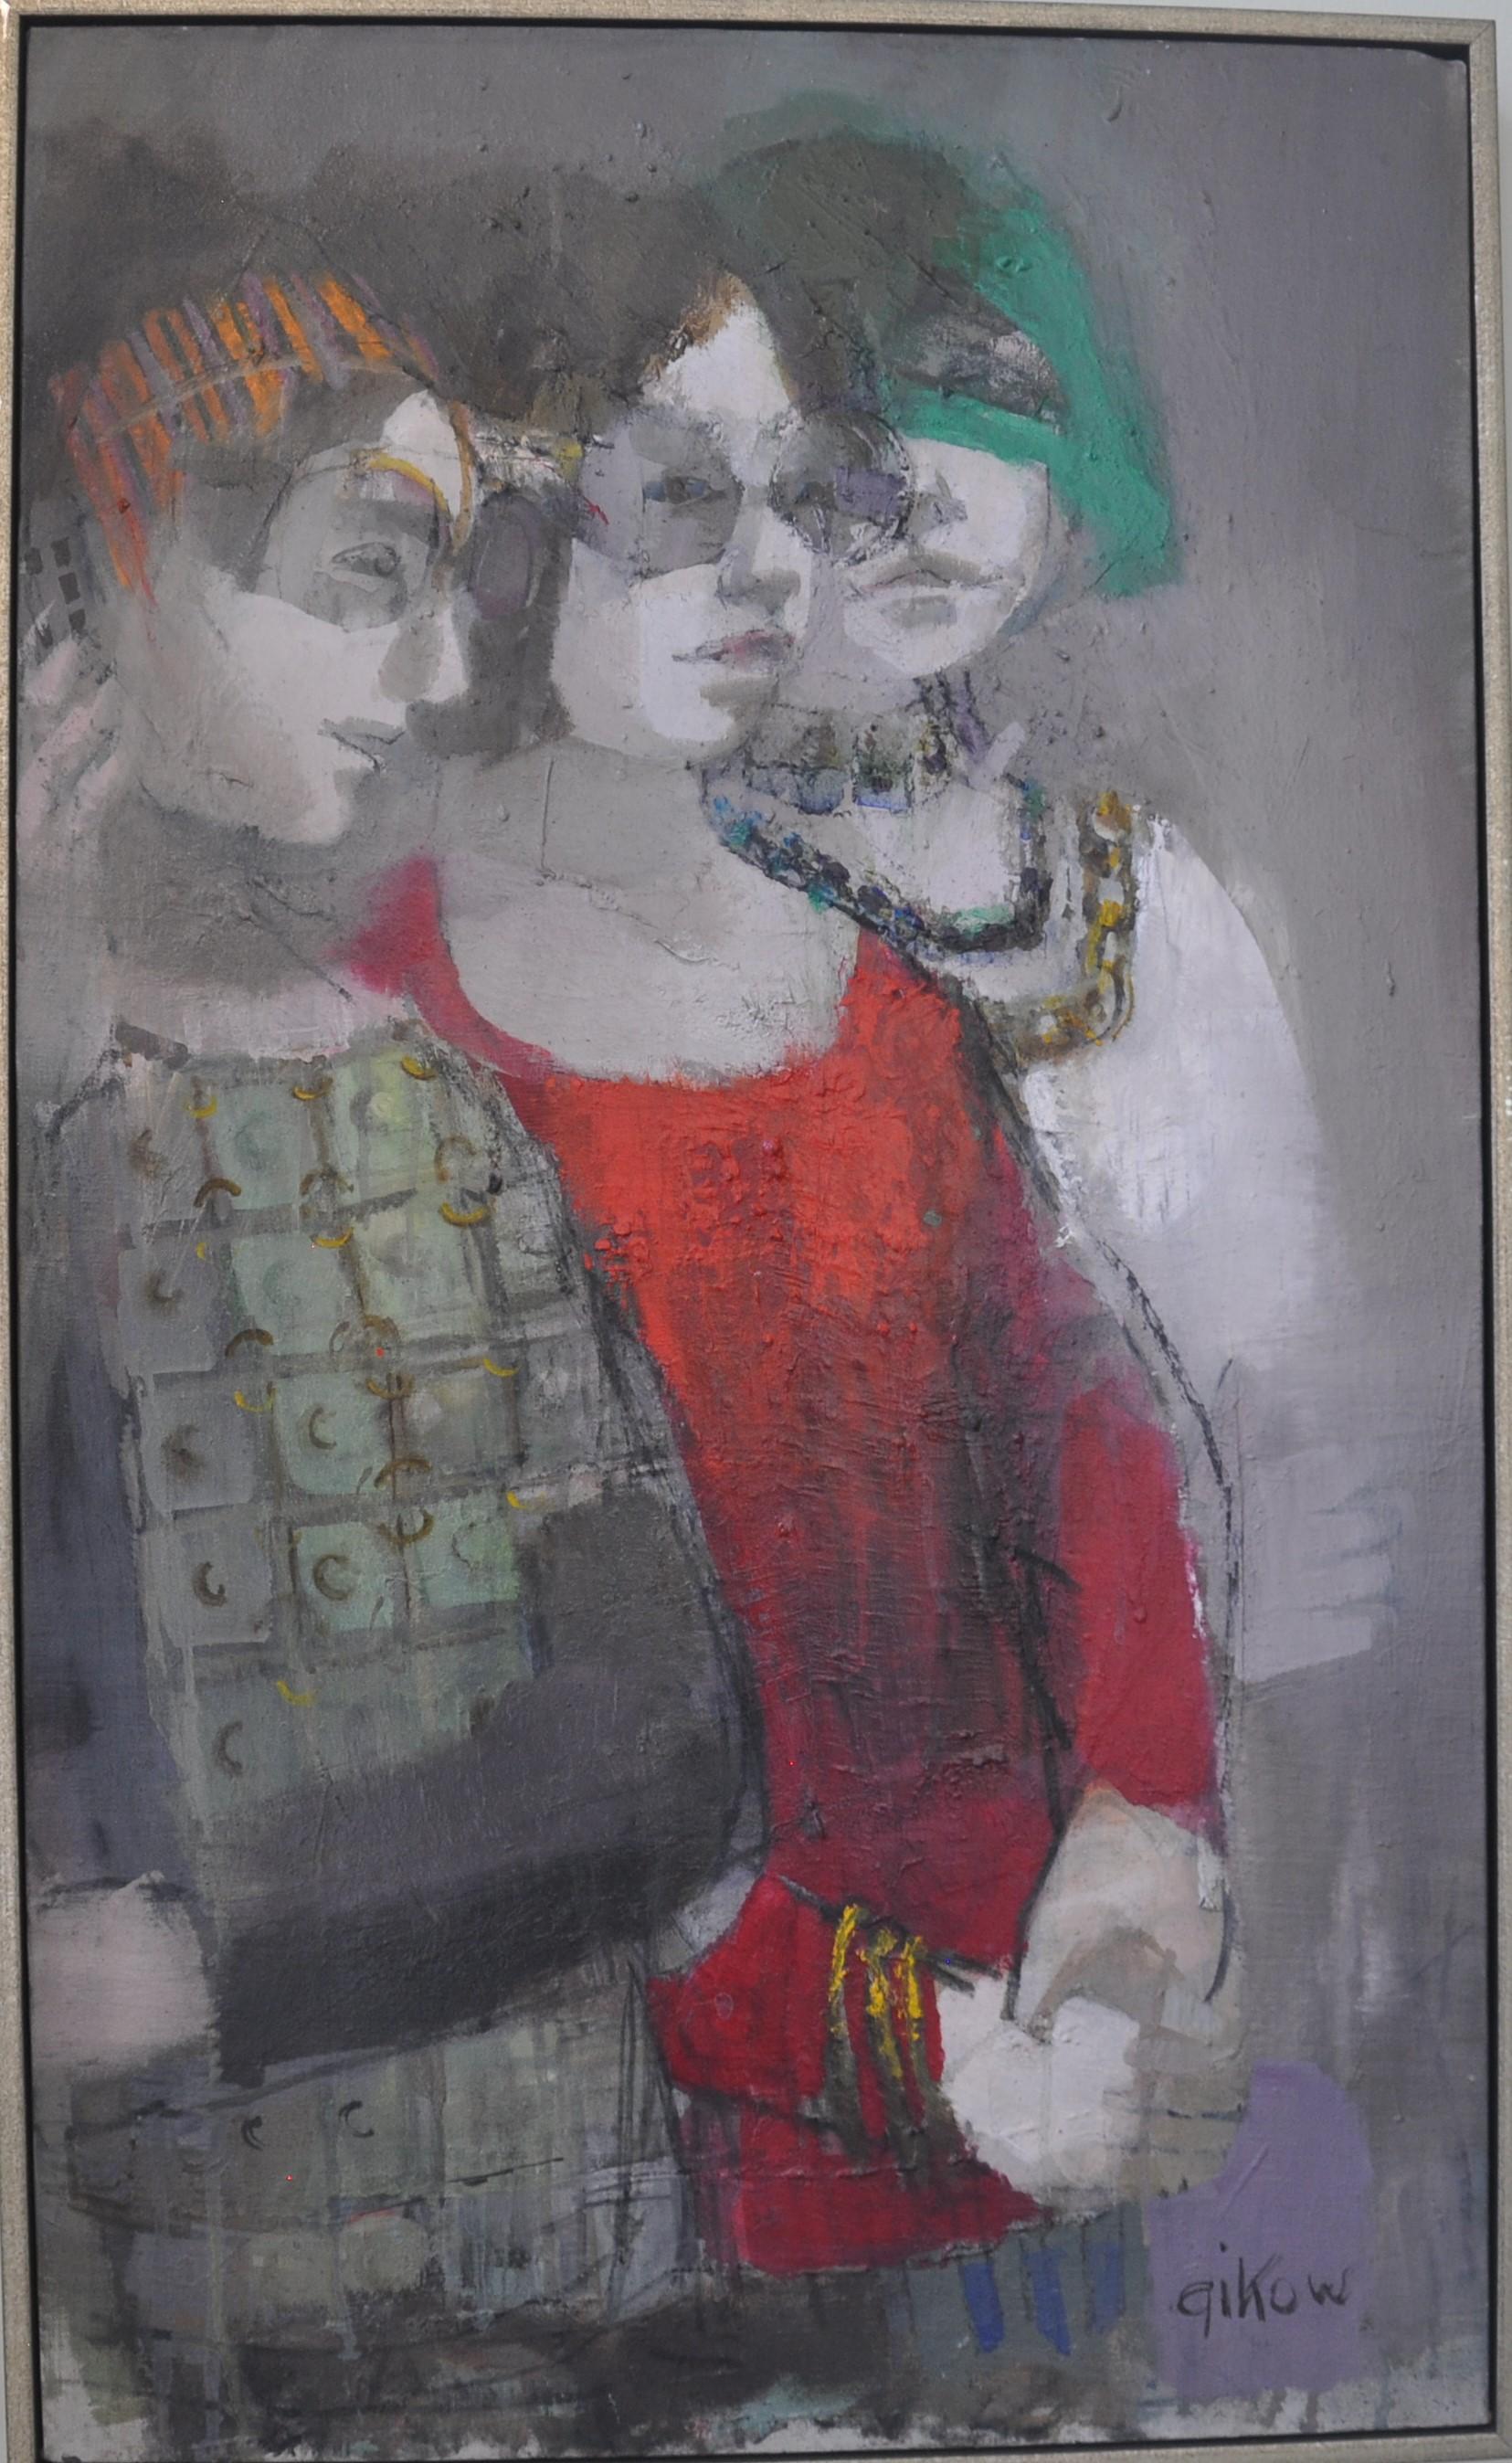 Three 60s Girls - Painting by Ruth Gikow